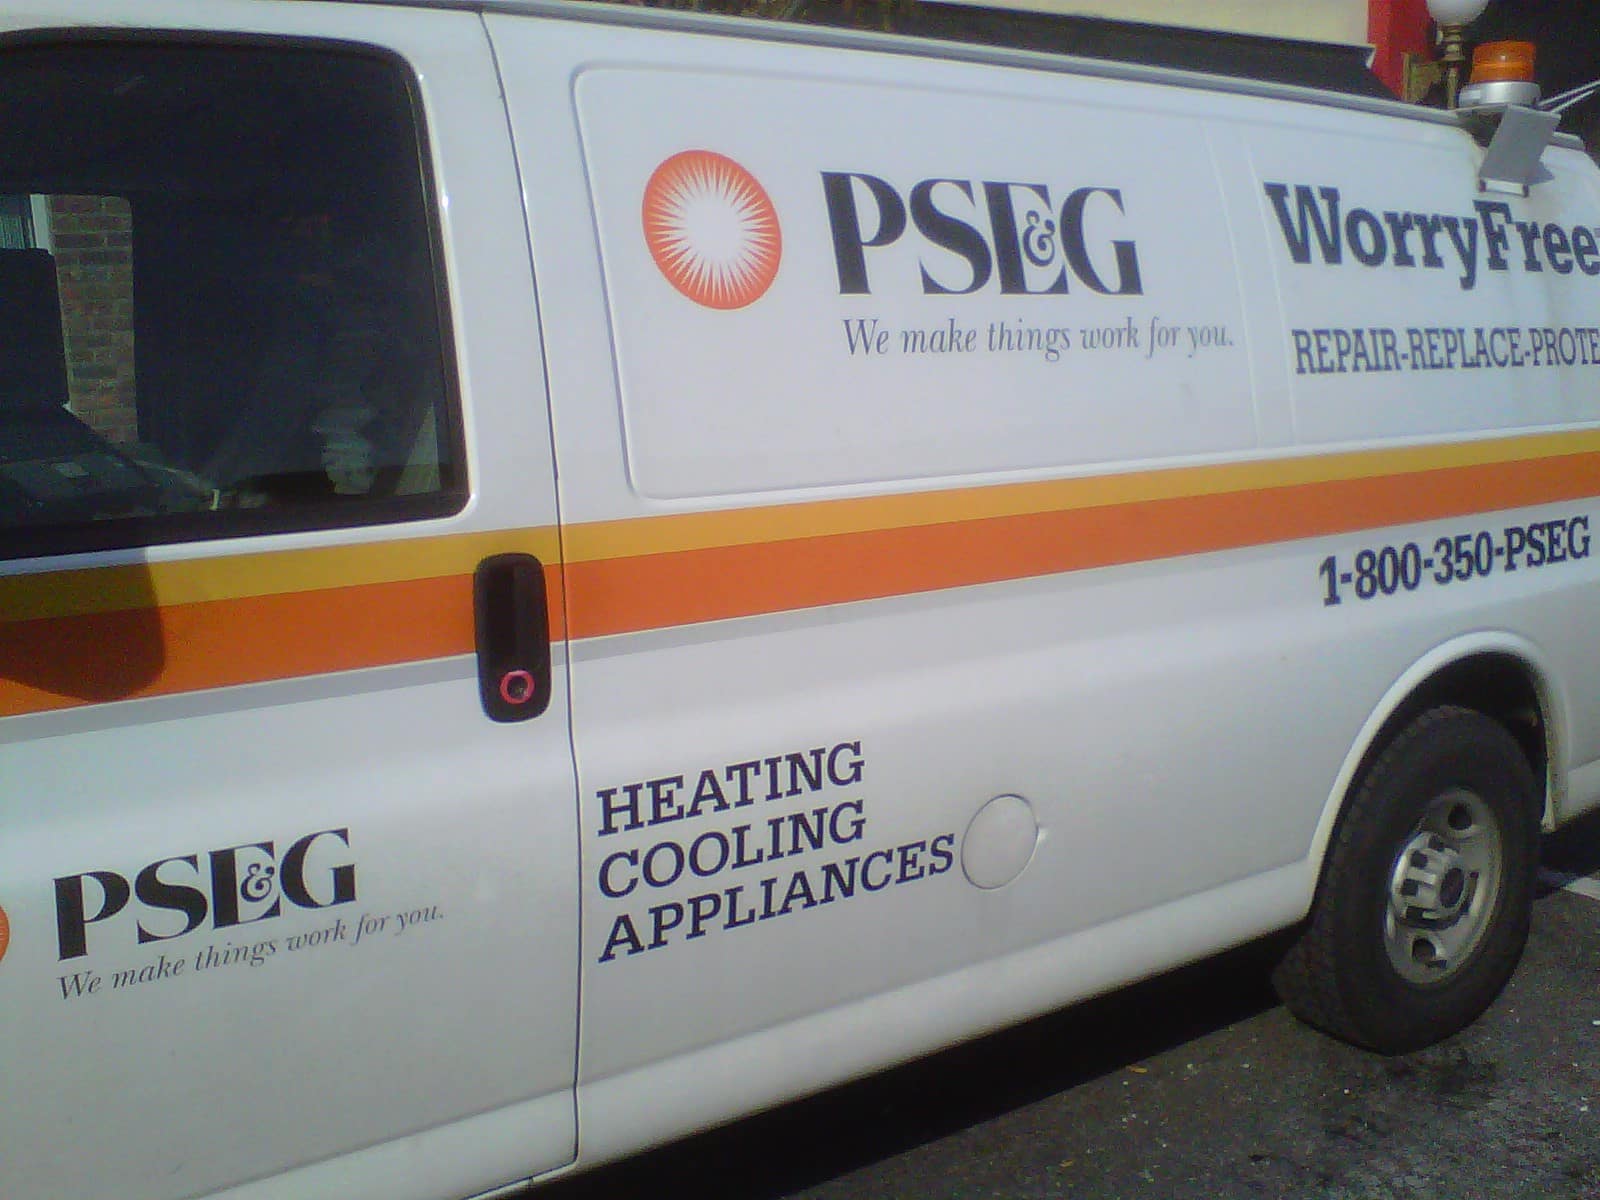 Pseg Appliance Rebate Application